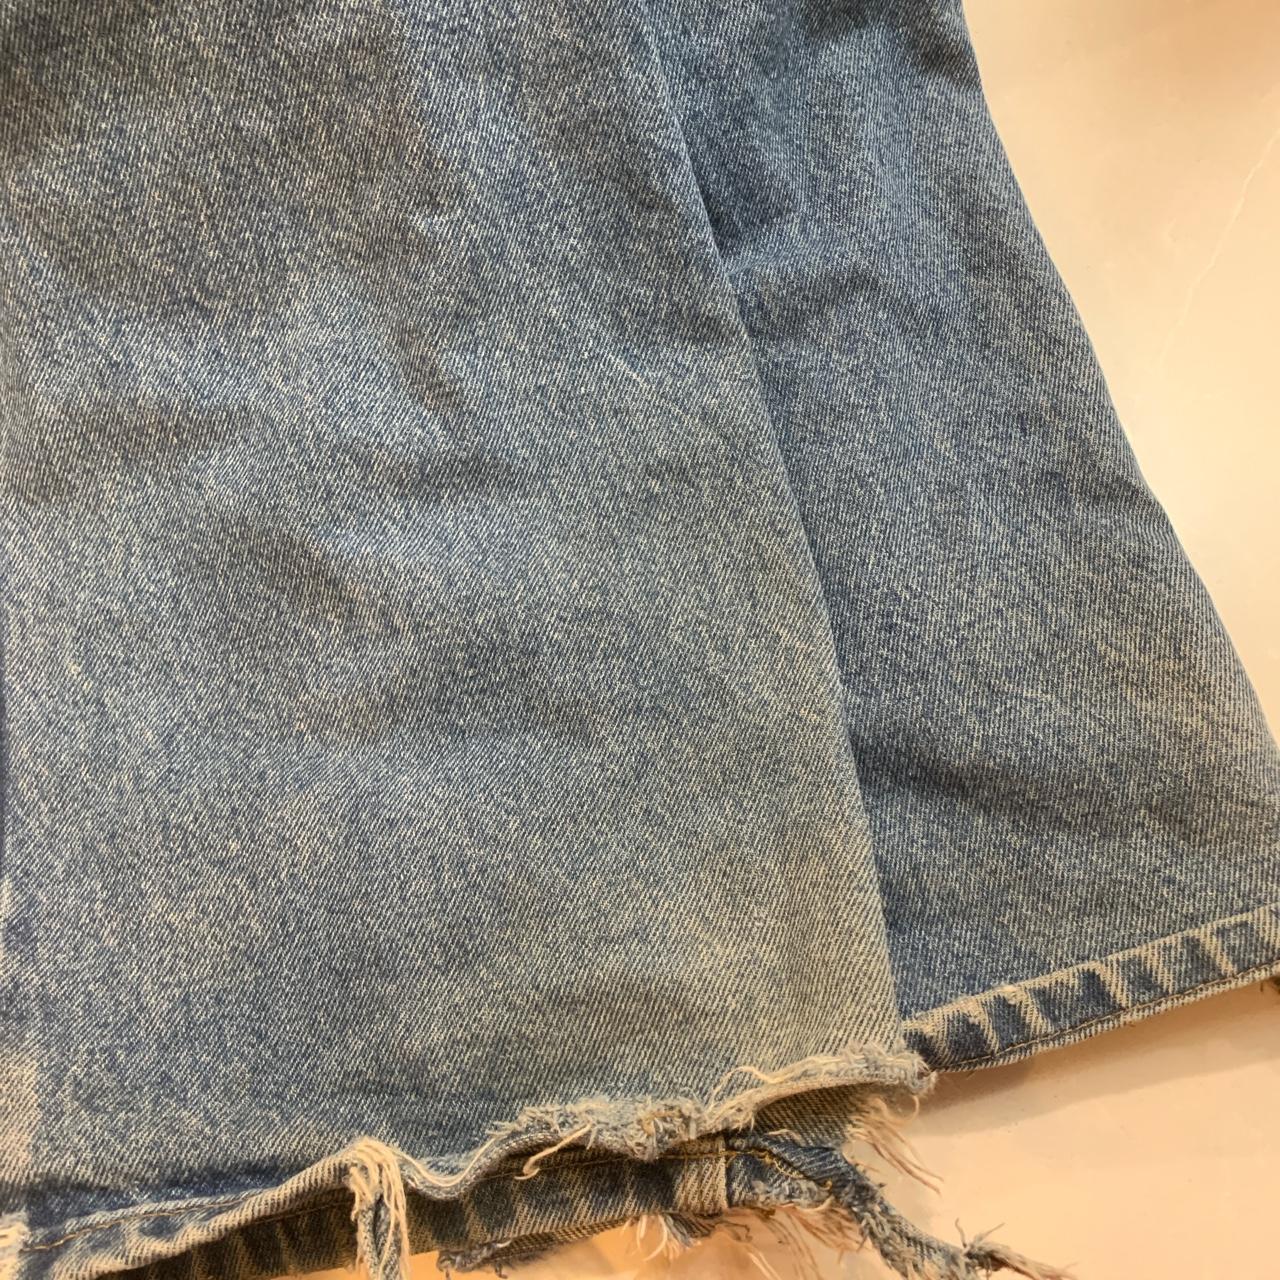 carhartt denim jeans rough around the edges but... - Depop